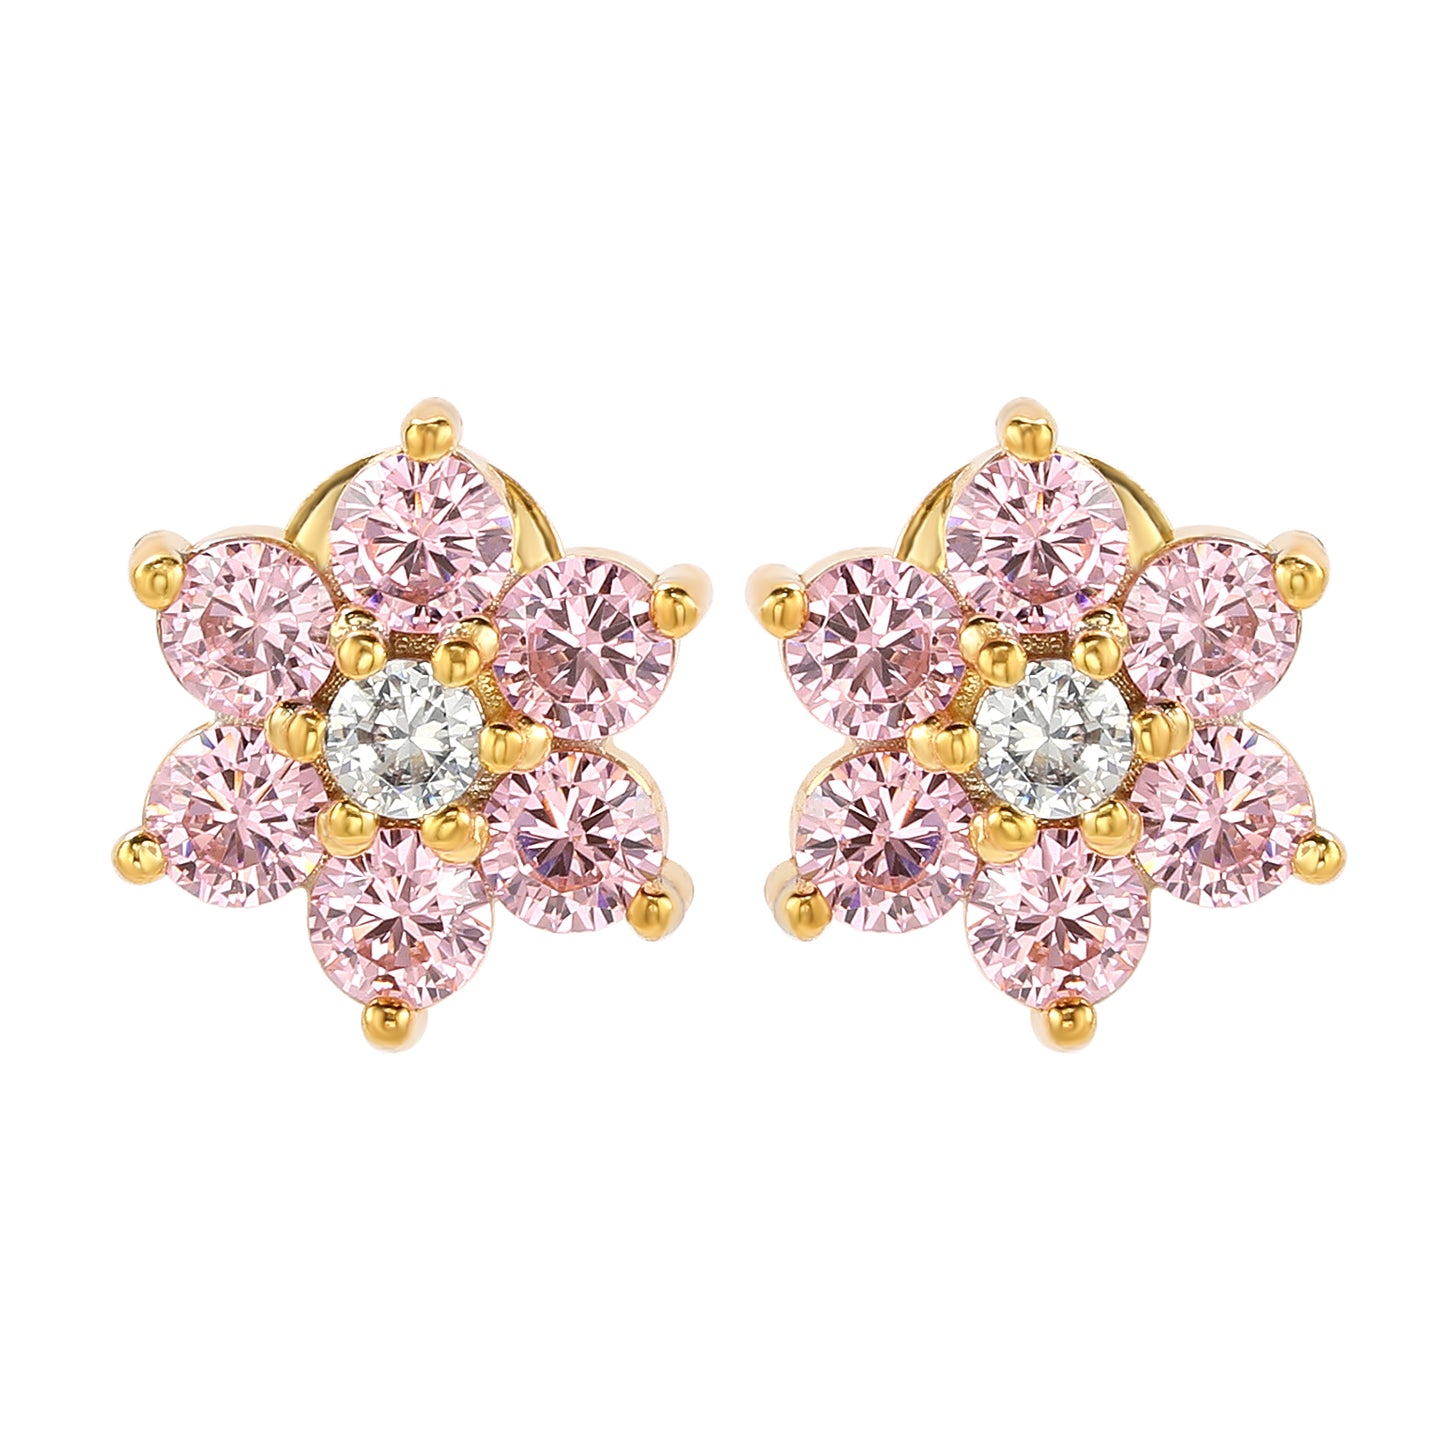 Suzy Levian Yellow Sterling Silver Pink Cubic Zirconia Flower Earrings